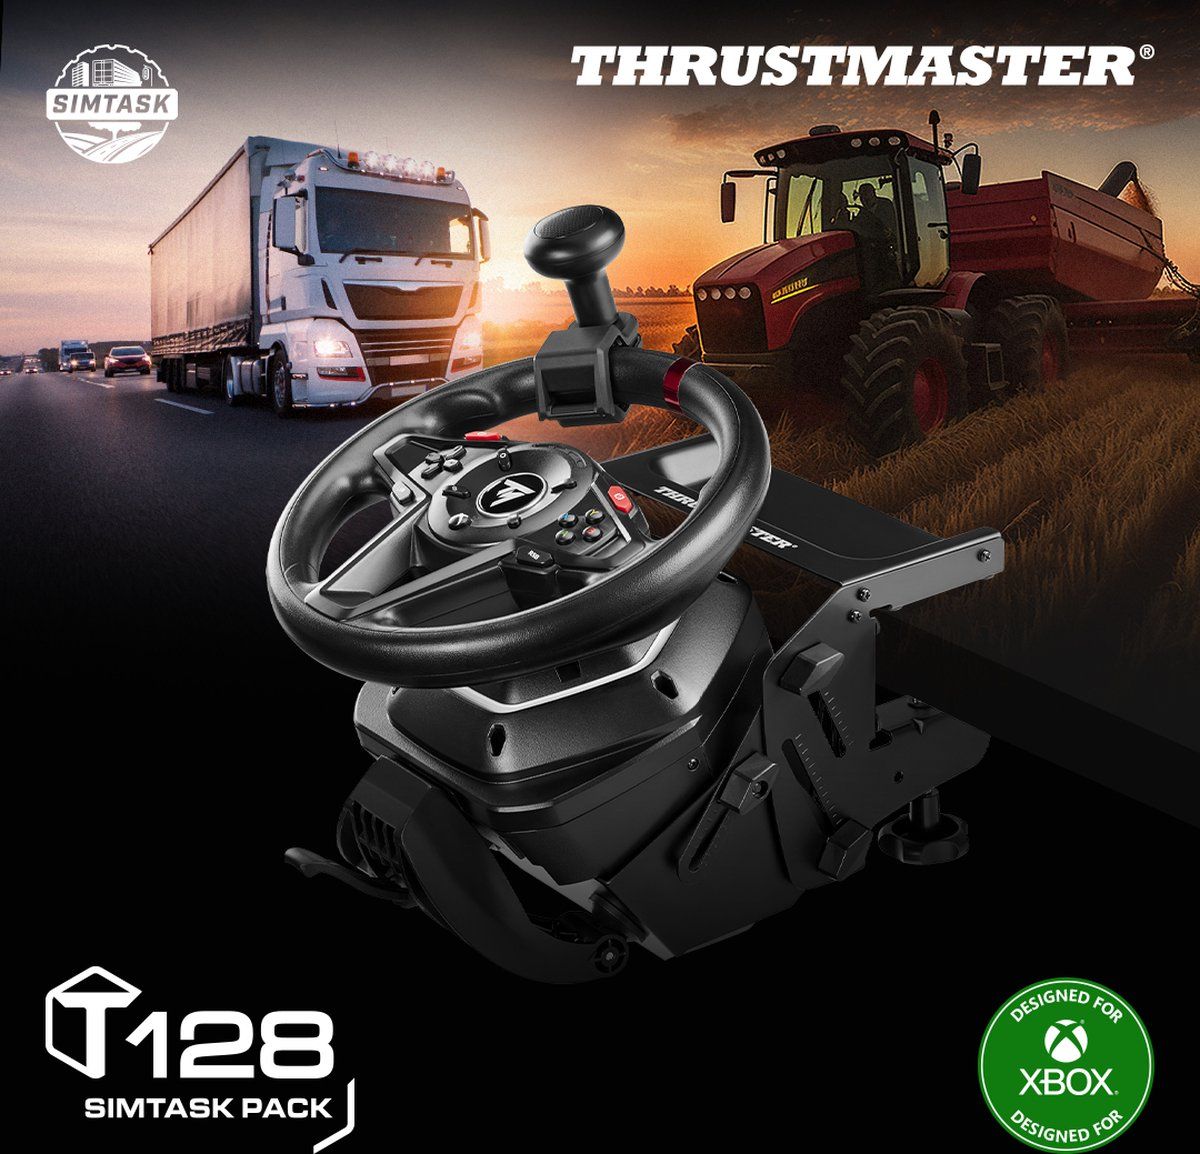 thrustmaster-t128-simtask-pack-voor-xbox-series-en-pc-bundle-inclusief-t128-racestuur-en-100-metalen-kit-bevestigingssysteem-voor-simulatie-games-voor-farming-bus-en-trucking-simulator-t2pm-pedaalset-force-feedback-en-schakelflippers